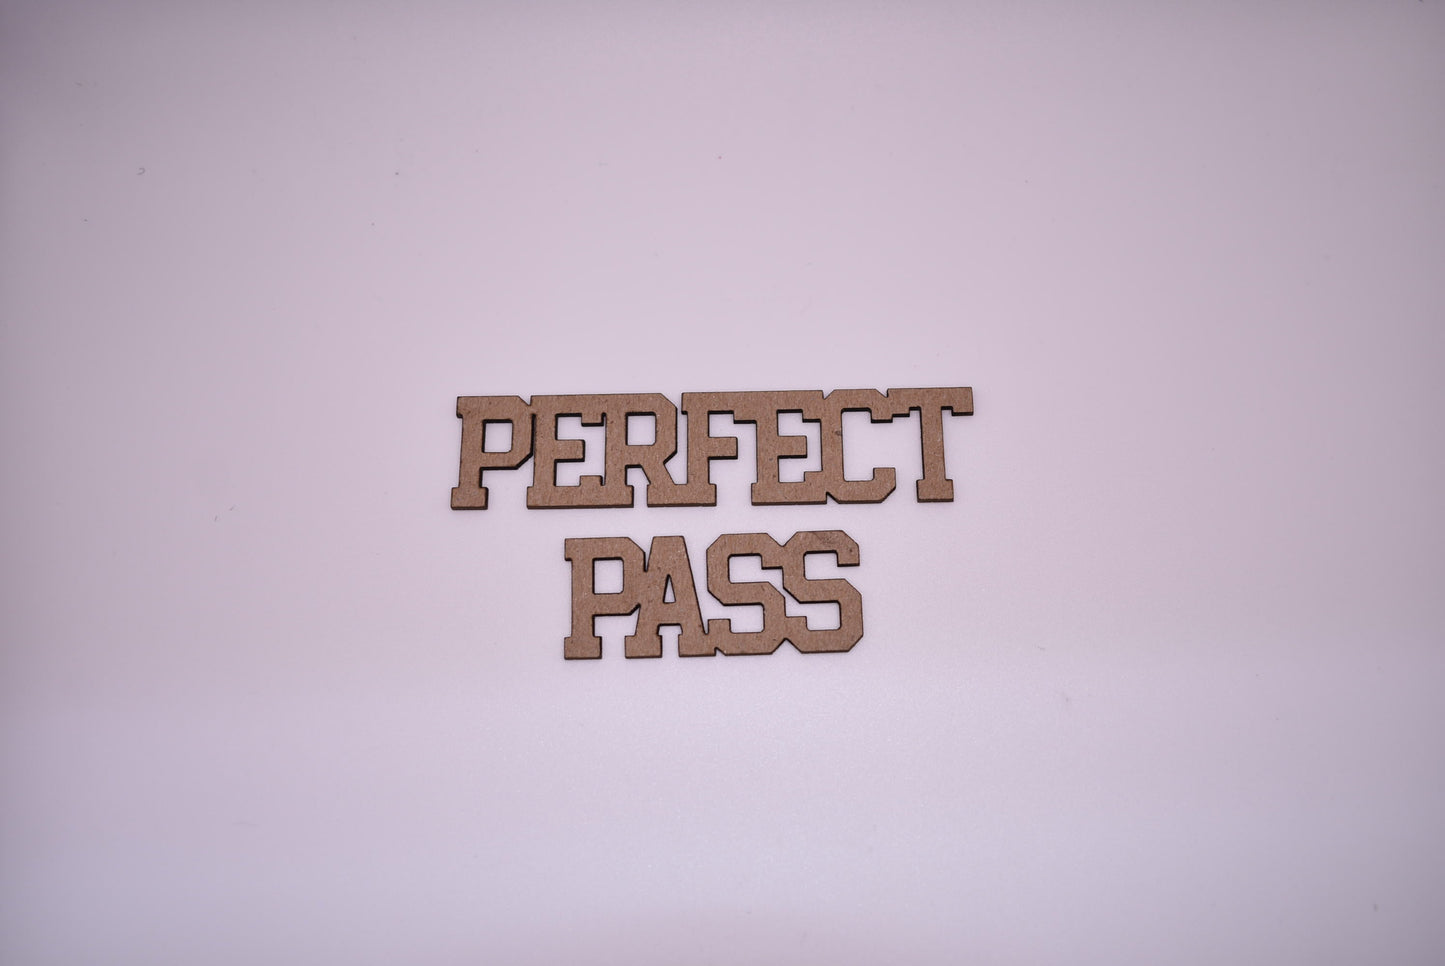 Perfect pass - Creative Designs By Kari